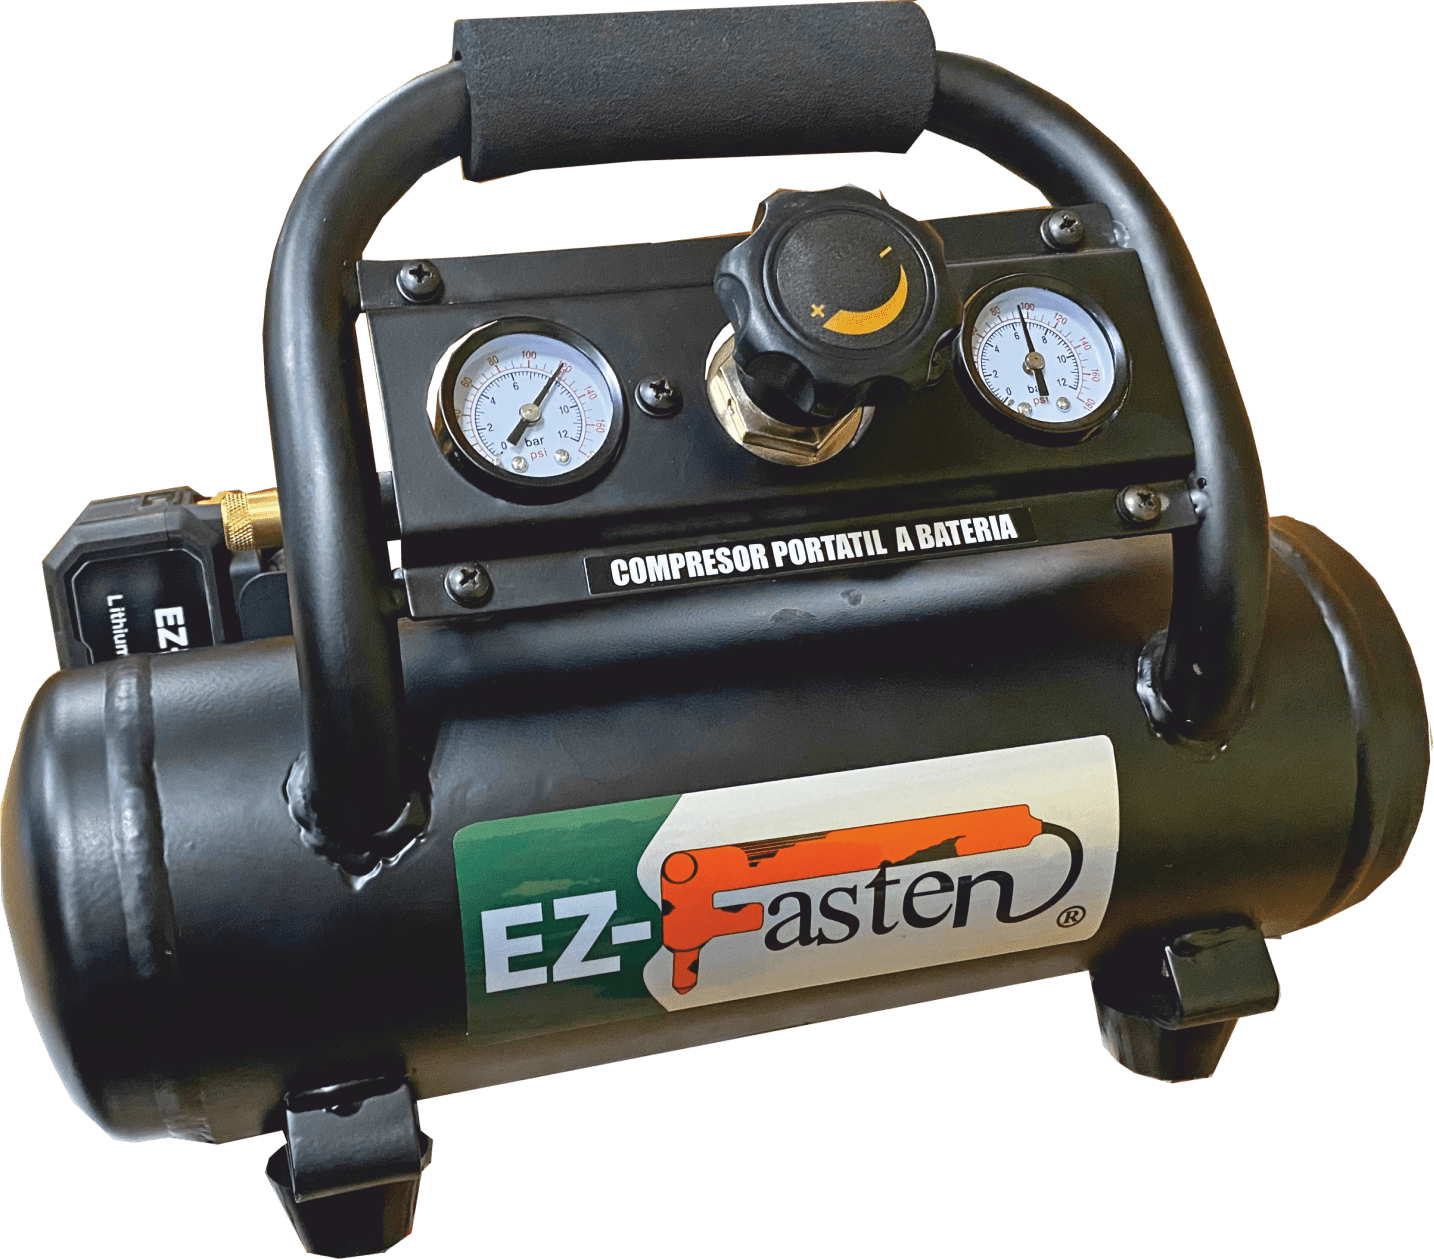 EZ-4 Battery - Compresor Portátil